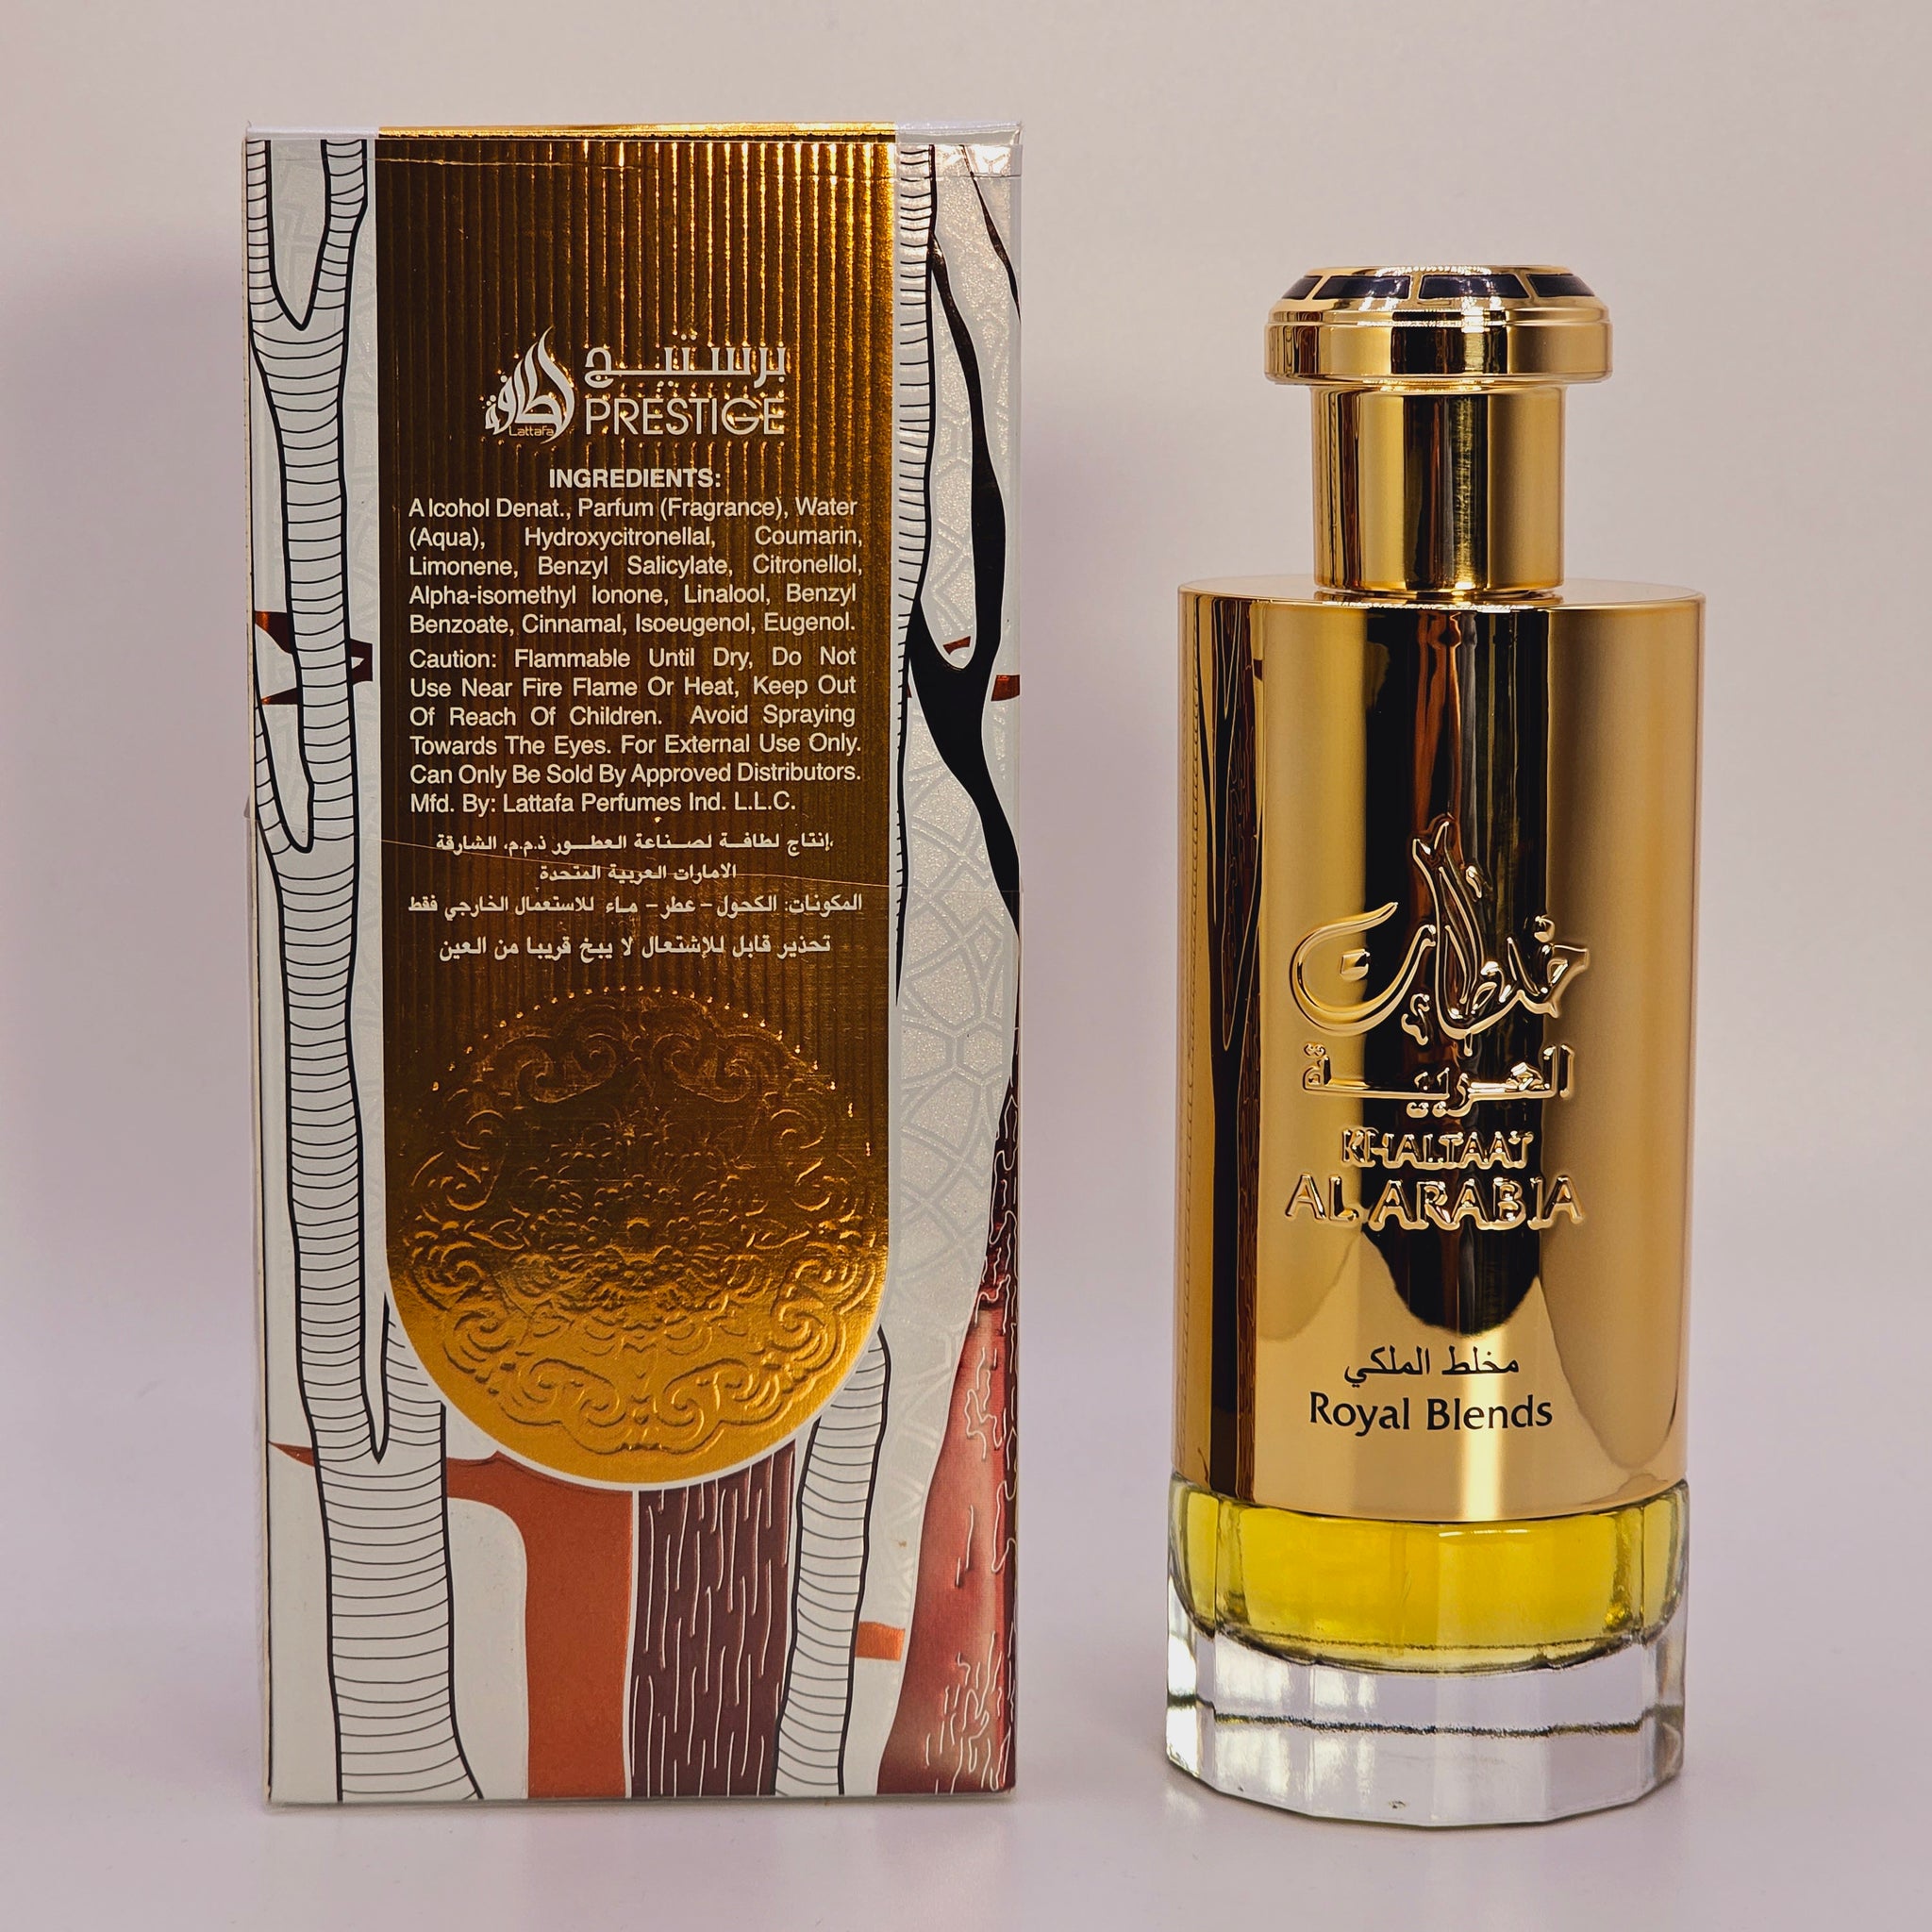 Khaltaat Al Arabia Royal Blends Eau De Parfum Unisex Spray 3.4 oz